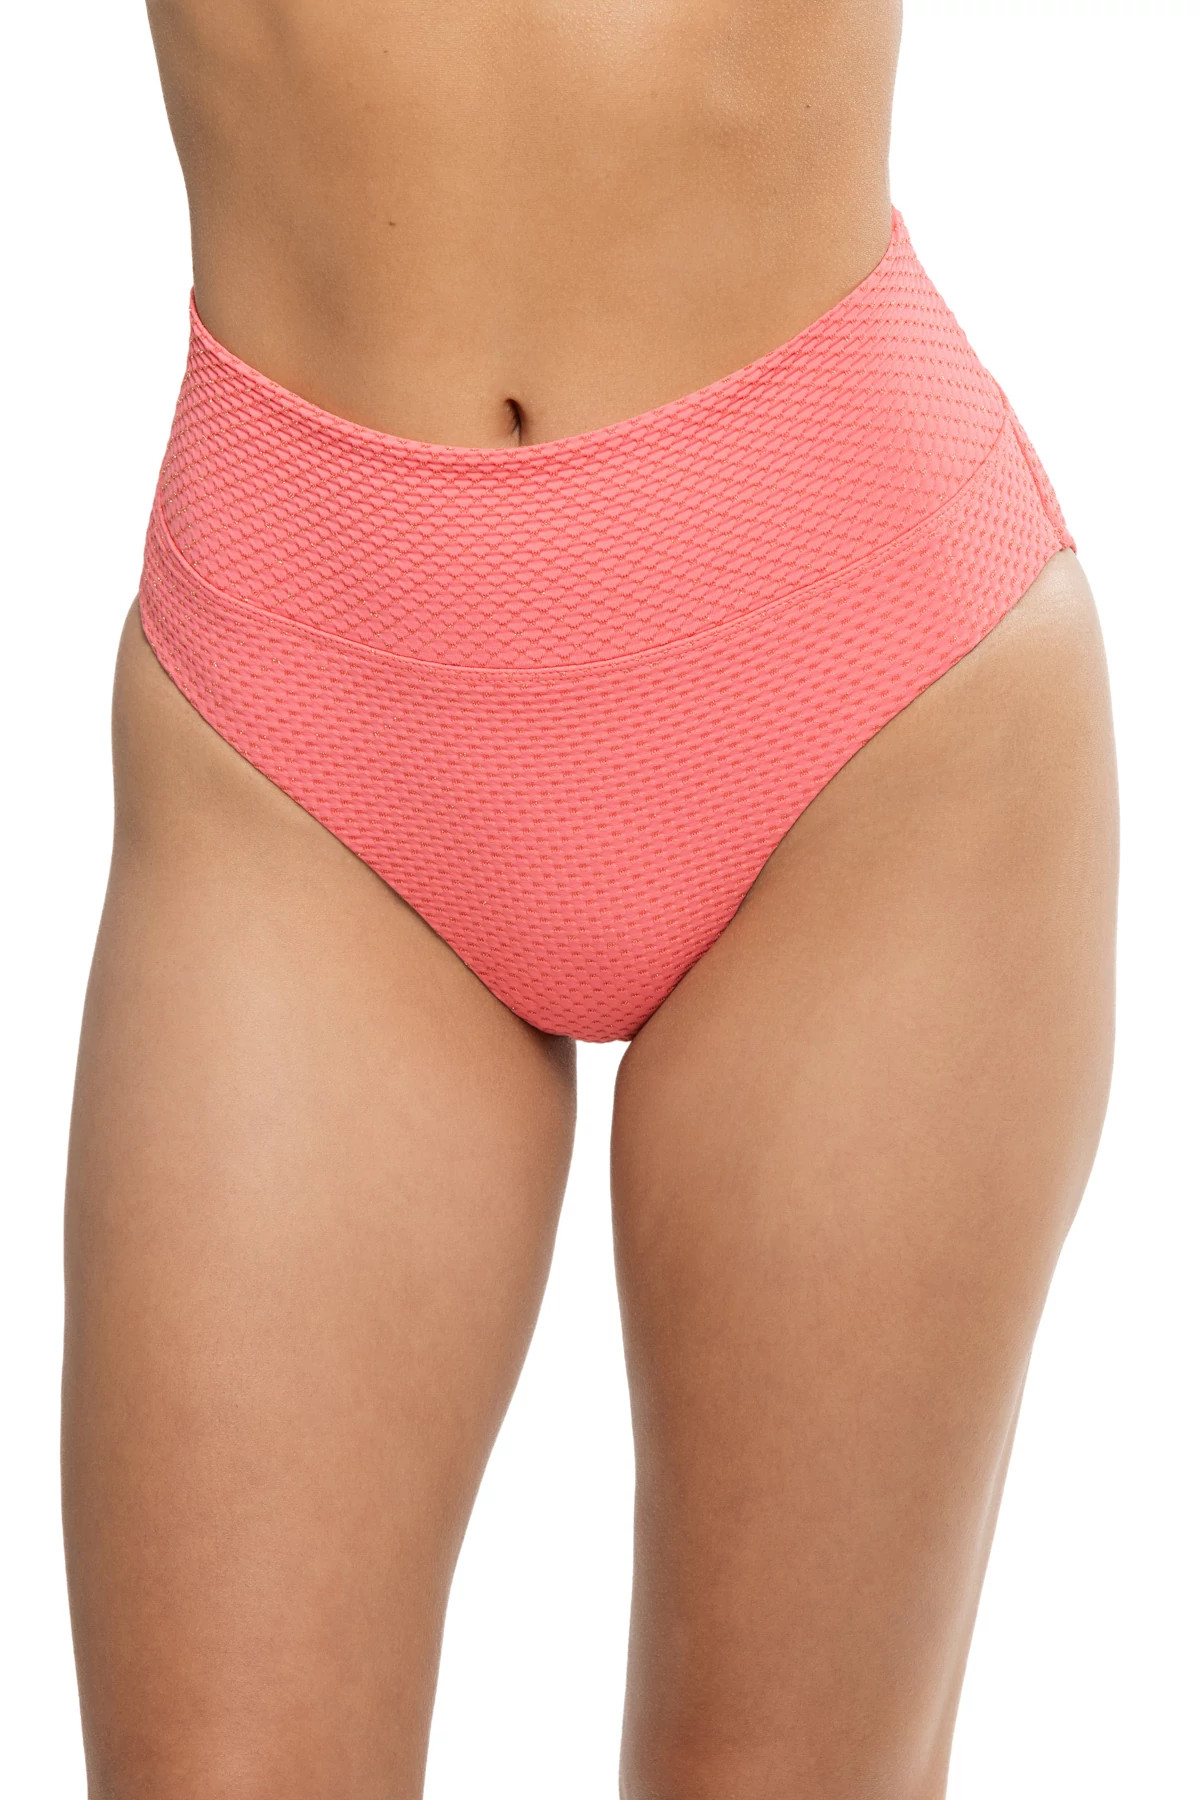 CORAL Sydney Textured Hipster Bikini Bottom image number 2